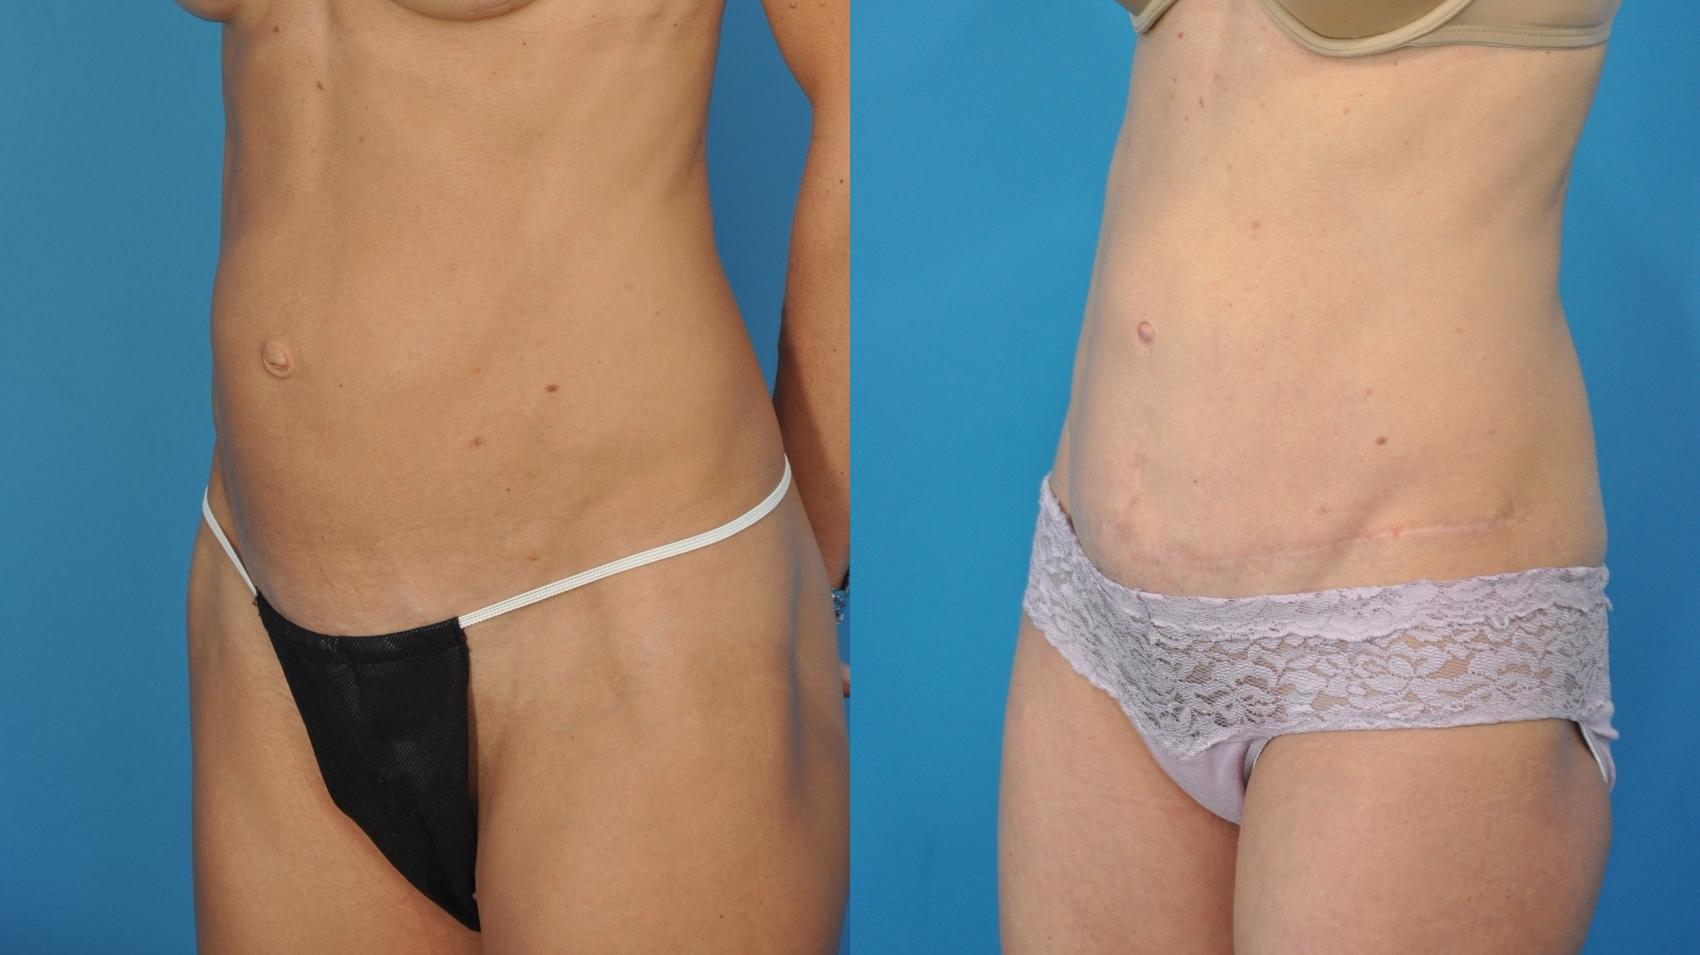 Before & After Abdominoplasty/Tummy Tuck Case 340 Left Oblique View in North Shore, IL